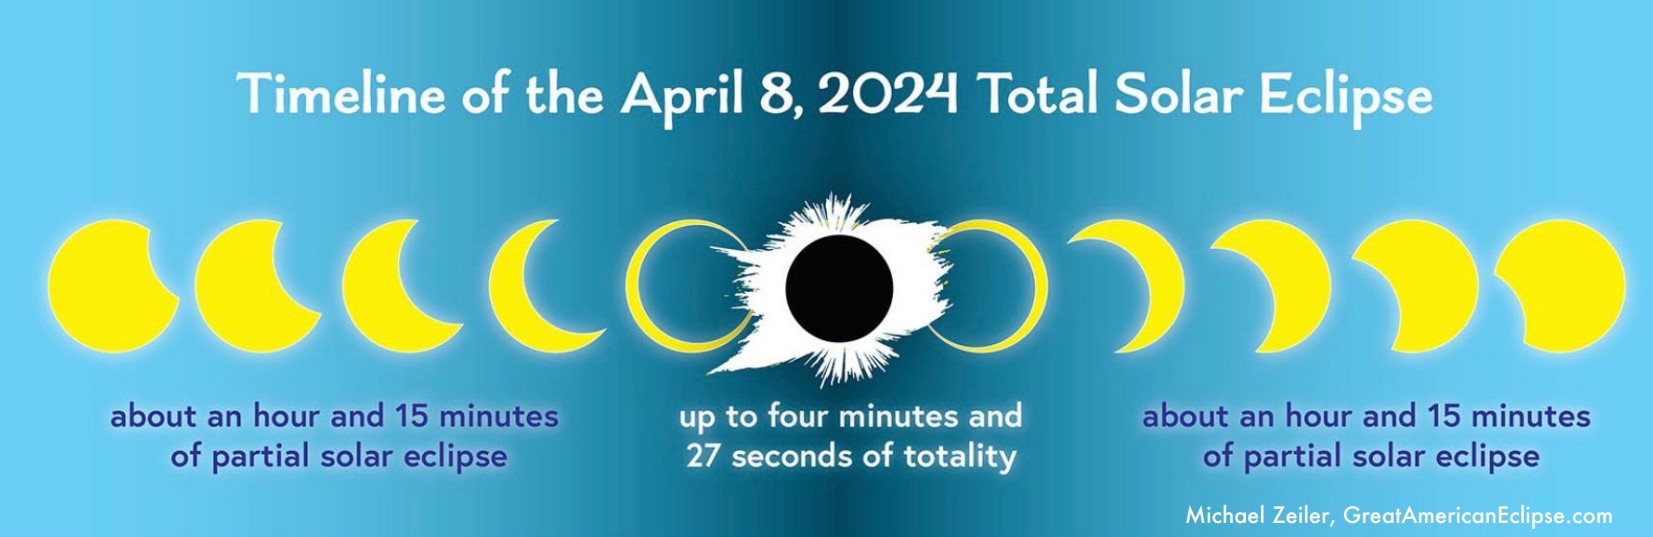 timeline for 2024 total eclipse